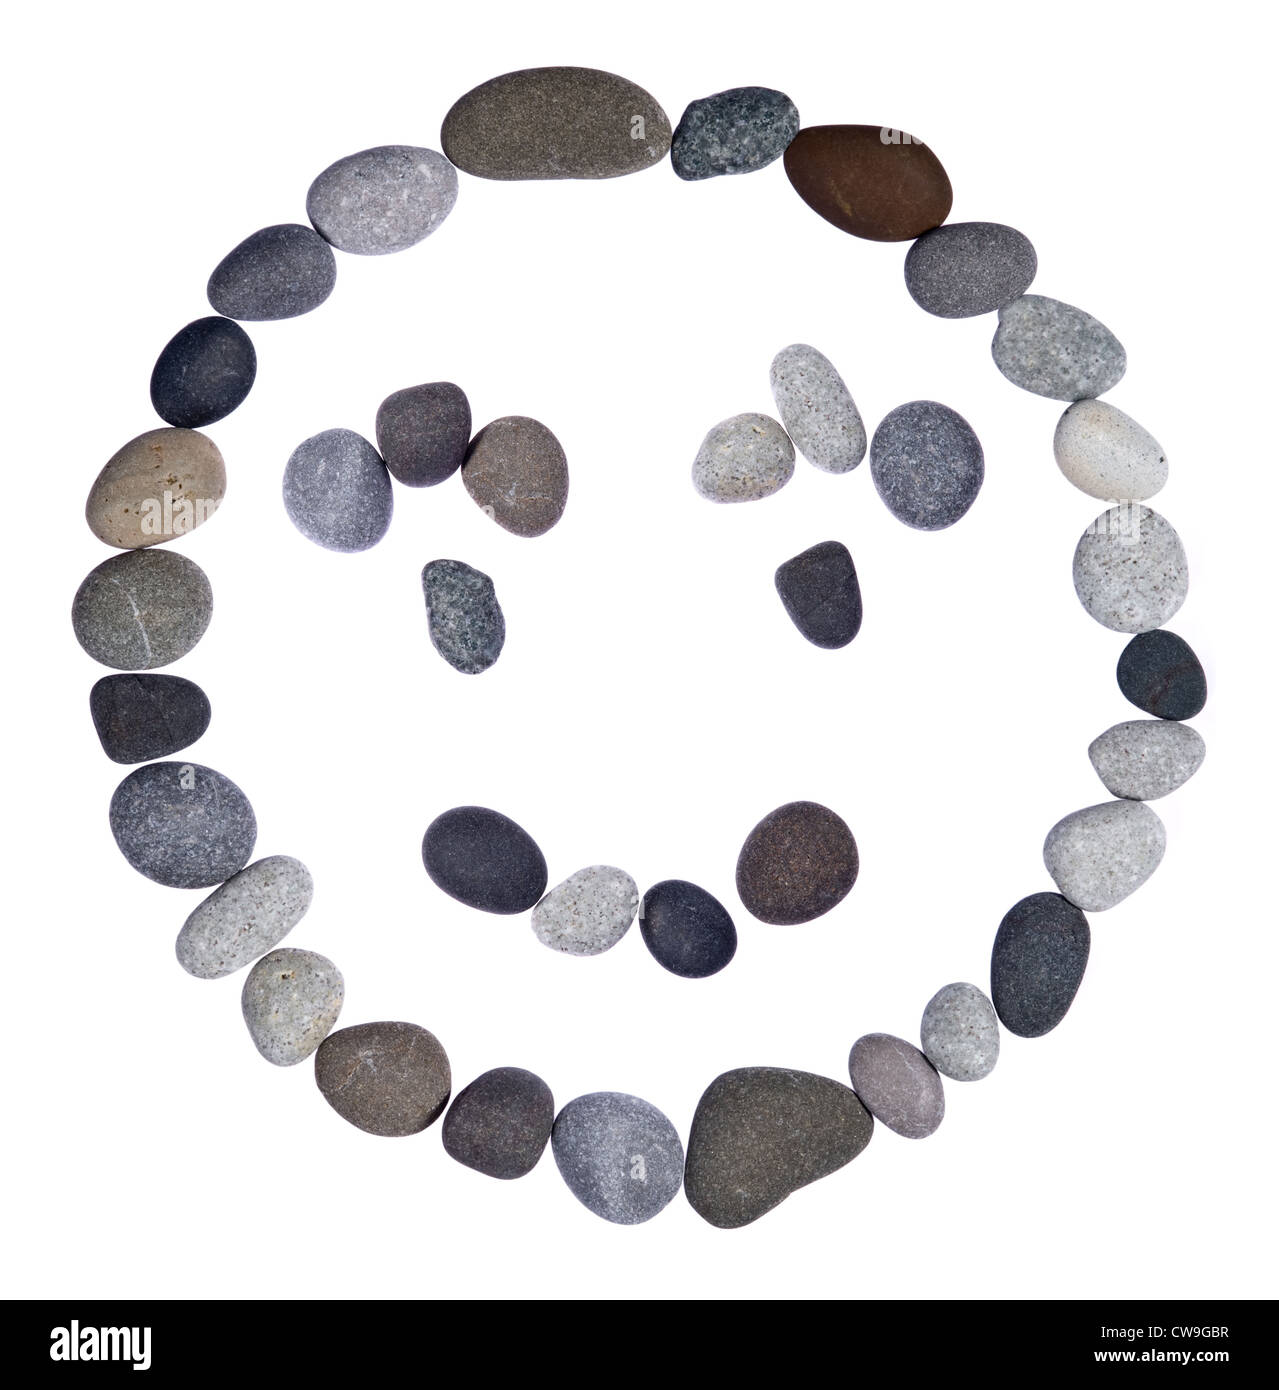 Emoticon smiley of stones on a white background Stock Photo